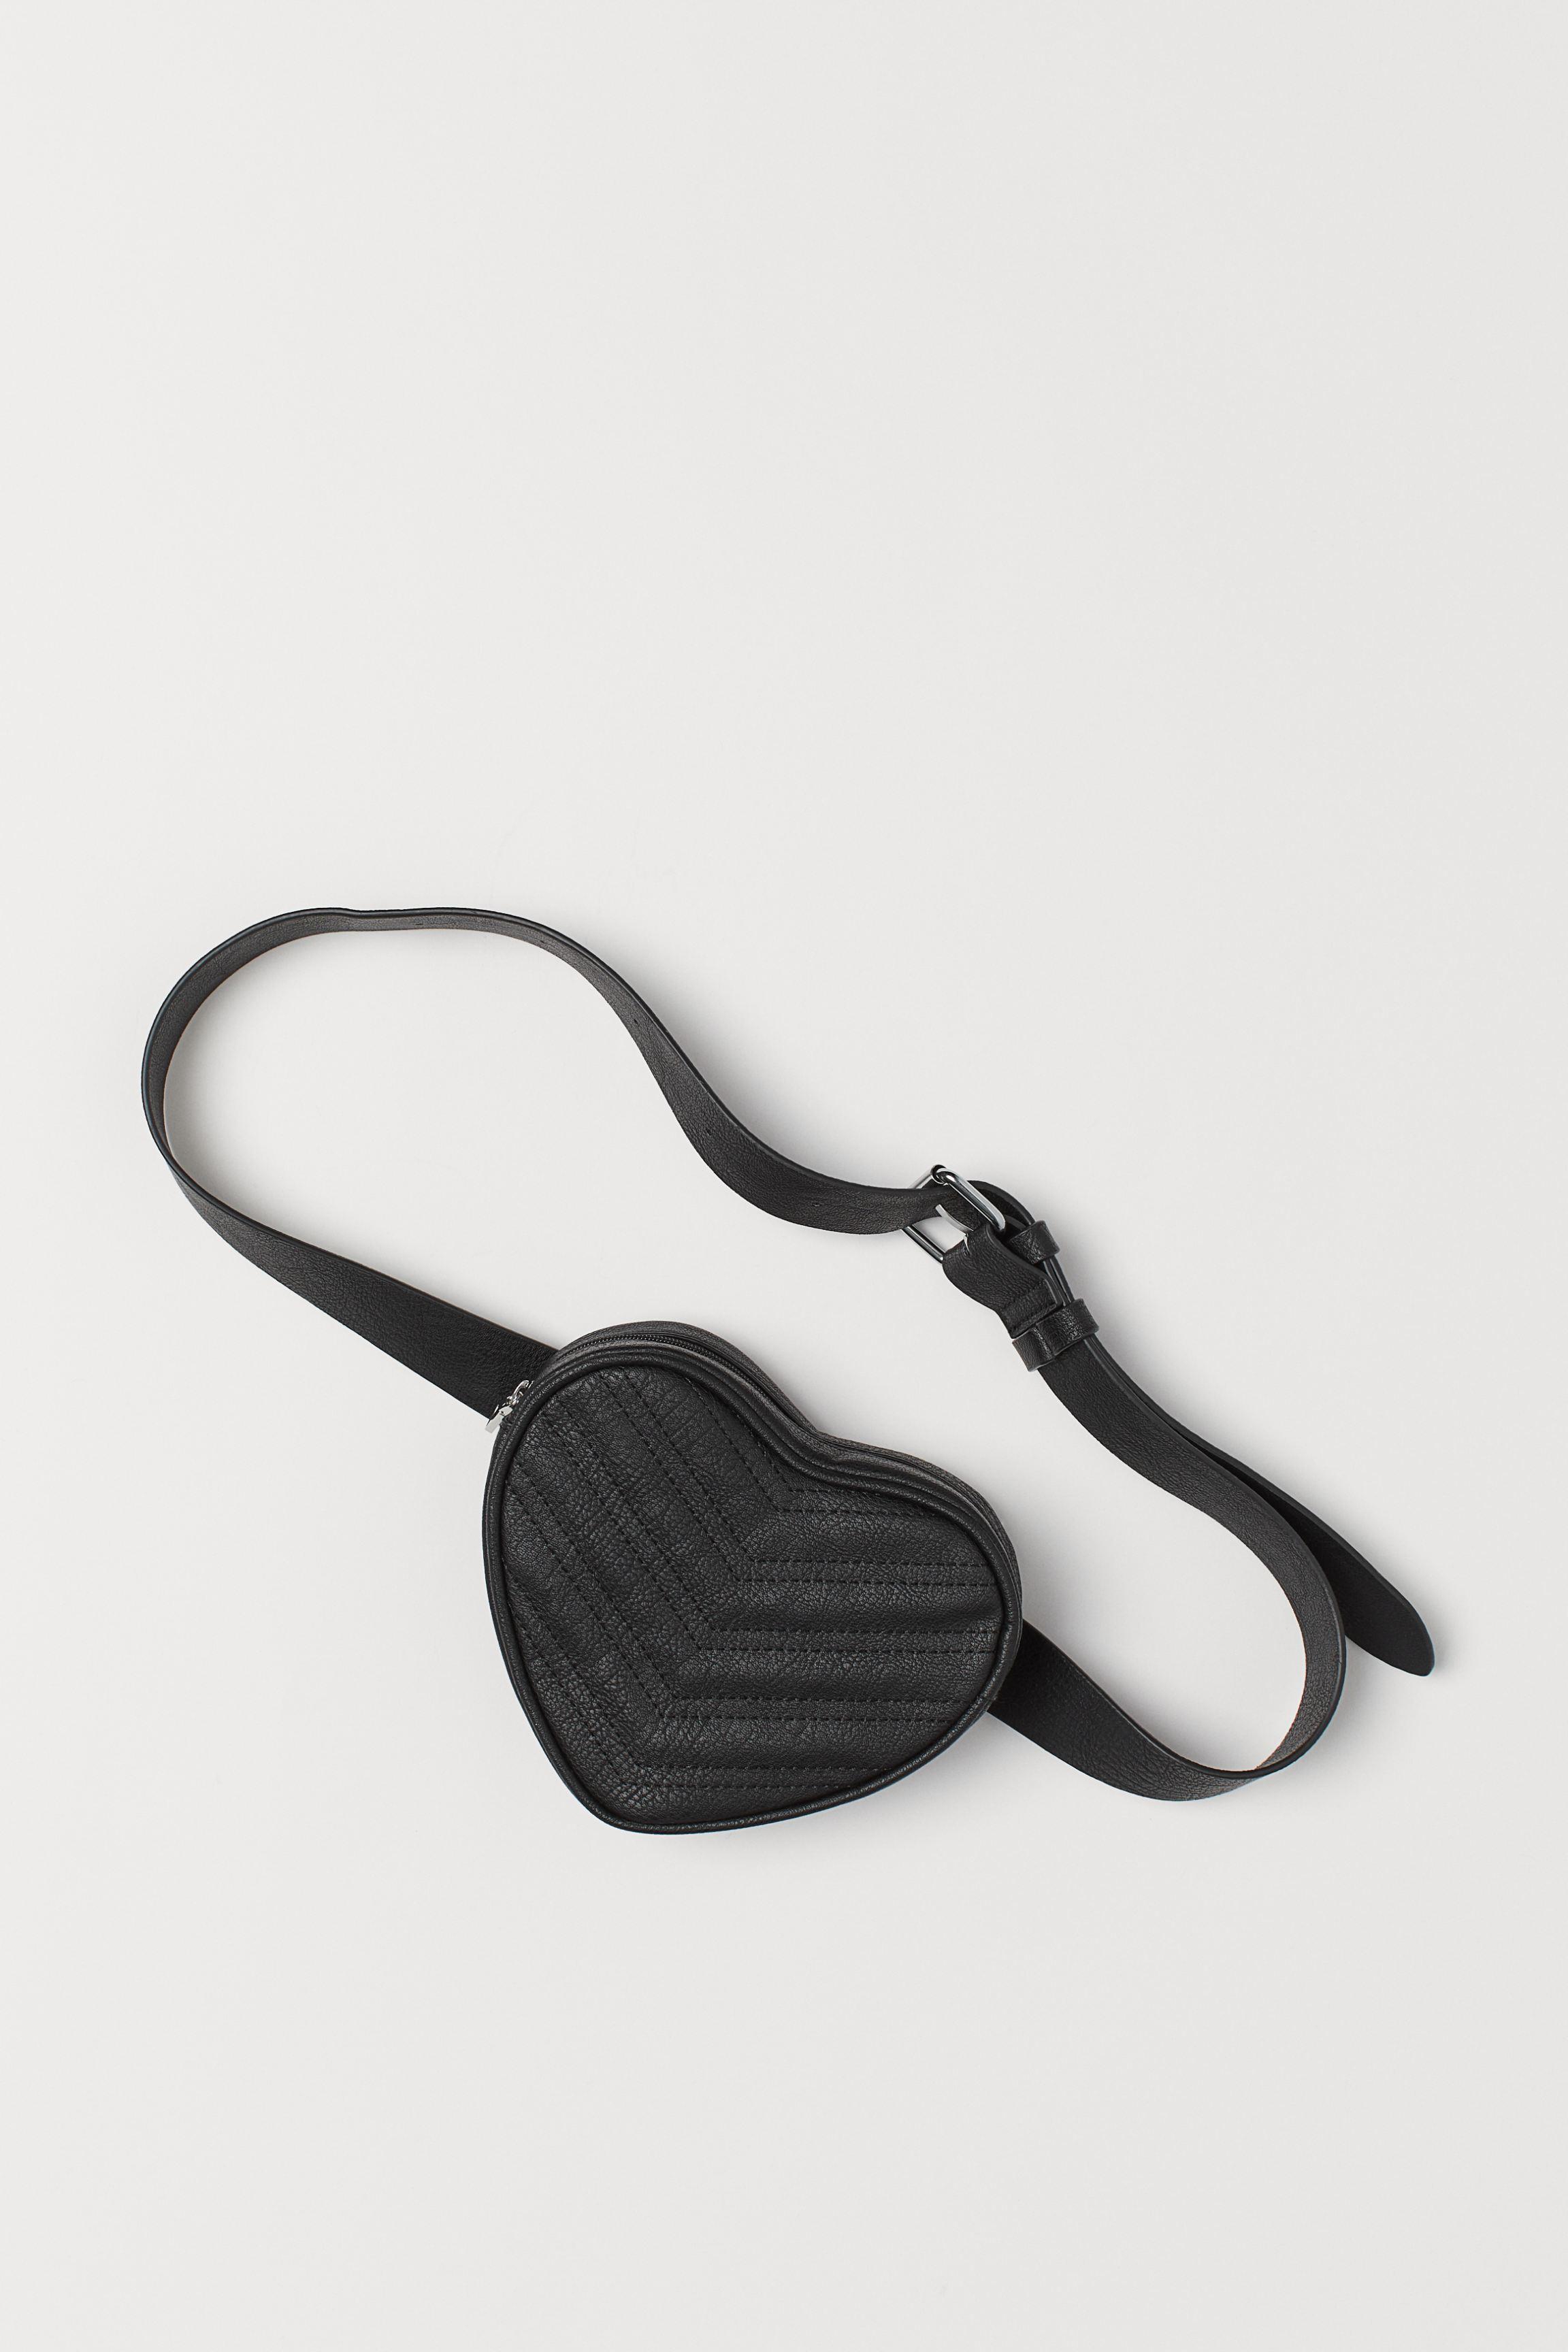 H&M Heart-shaped Waist Bag in Black | Lyst